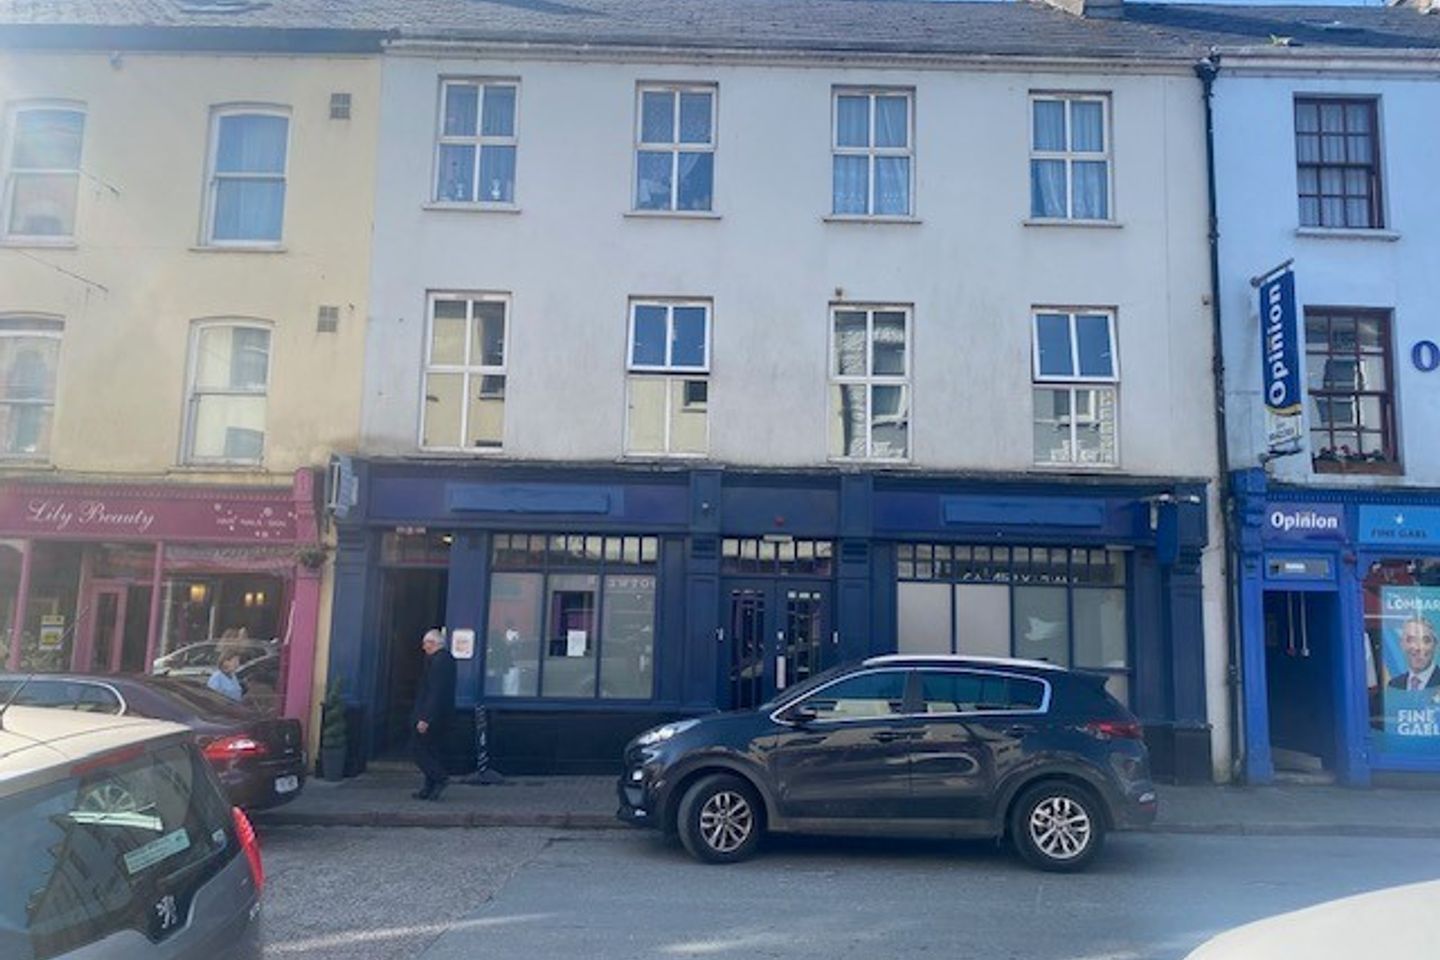 South Main Street, Bandon, Co. Cork